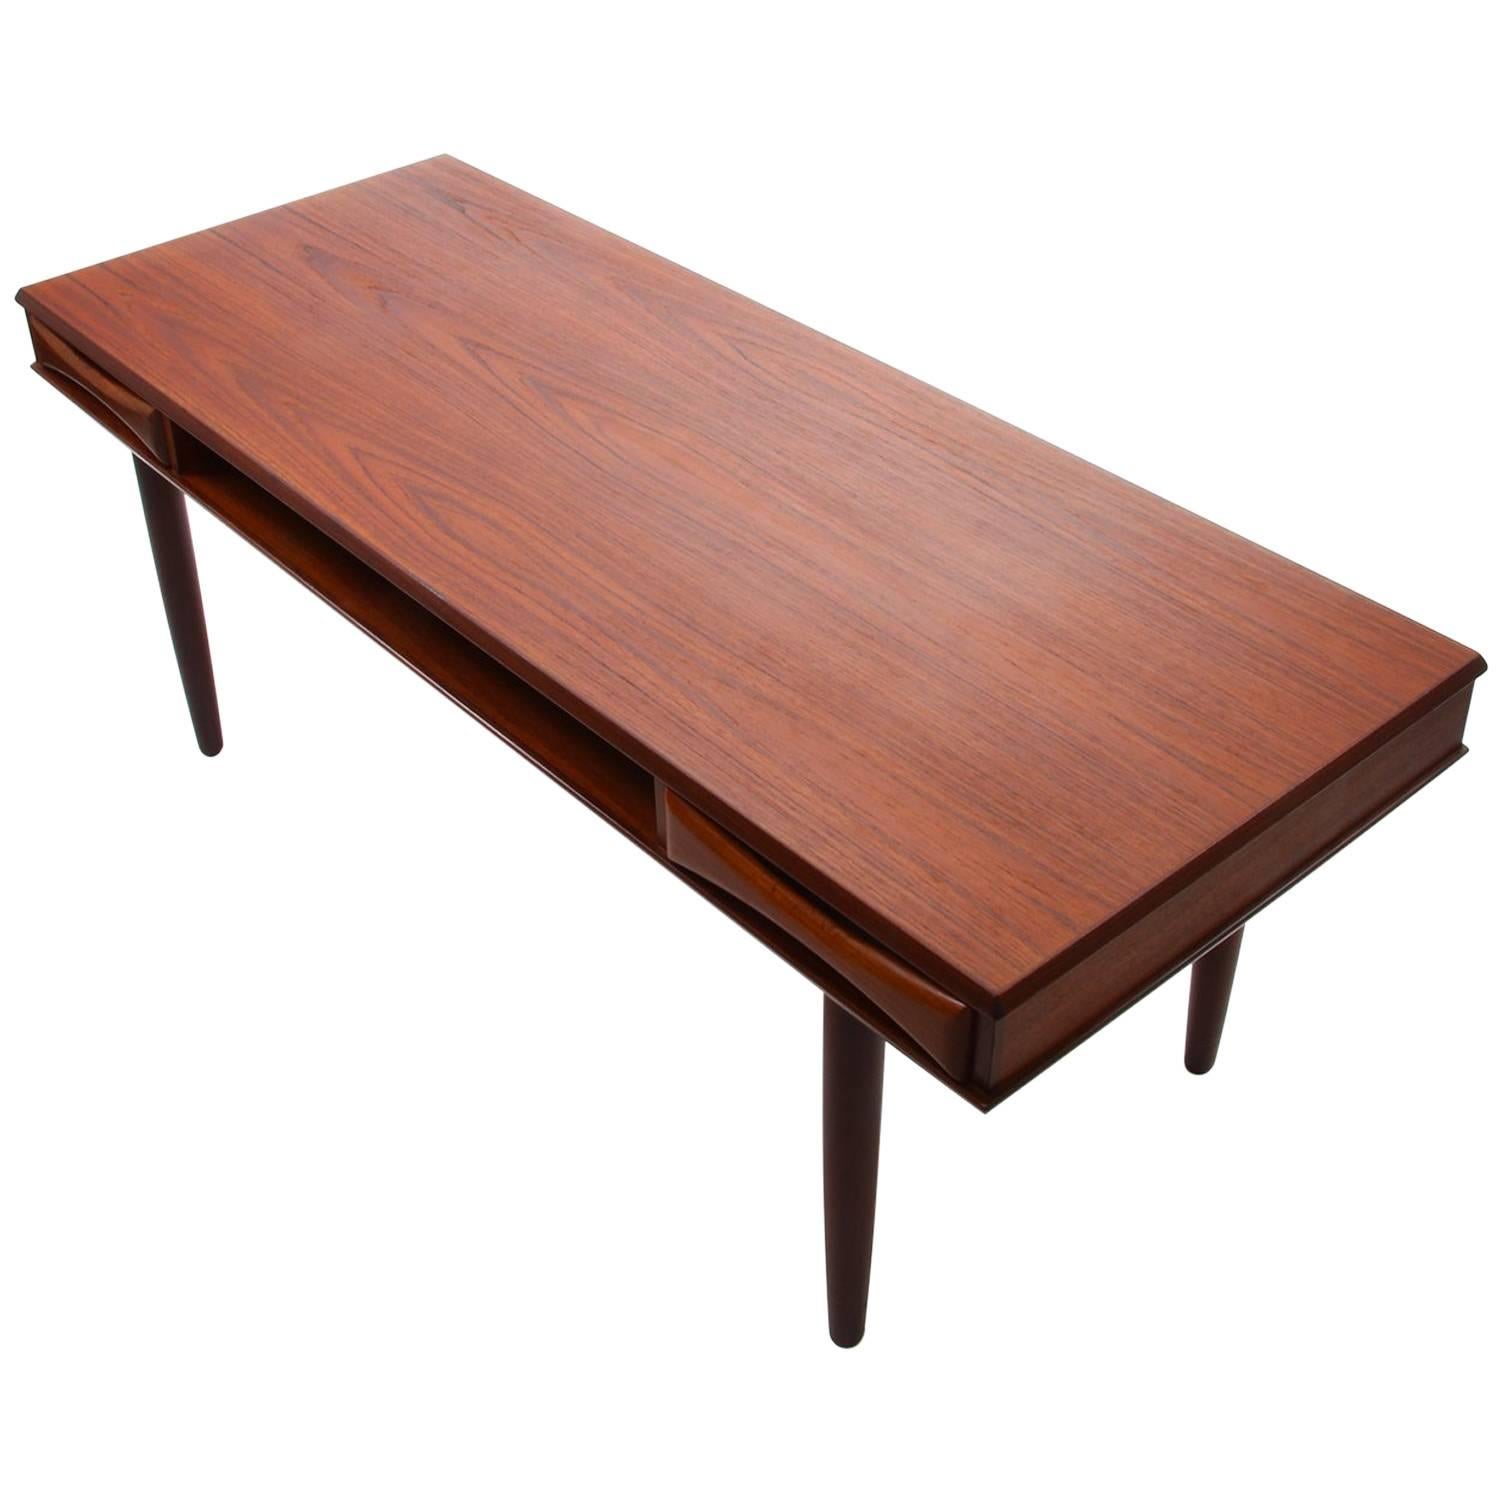 Teak Coffee Table by Danish Furniture Maker, 1960s Scandinavian Modern Table For Sale